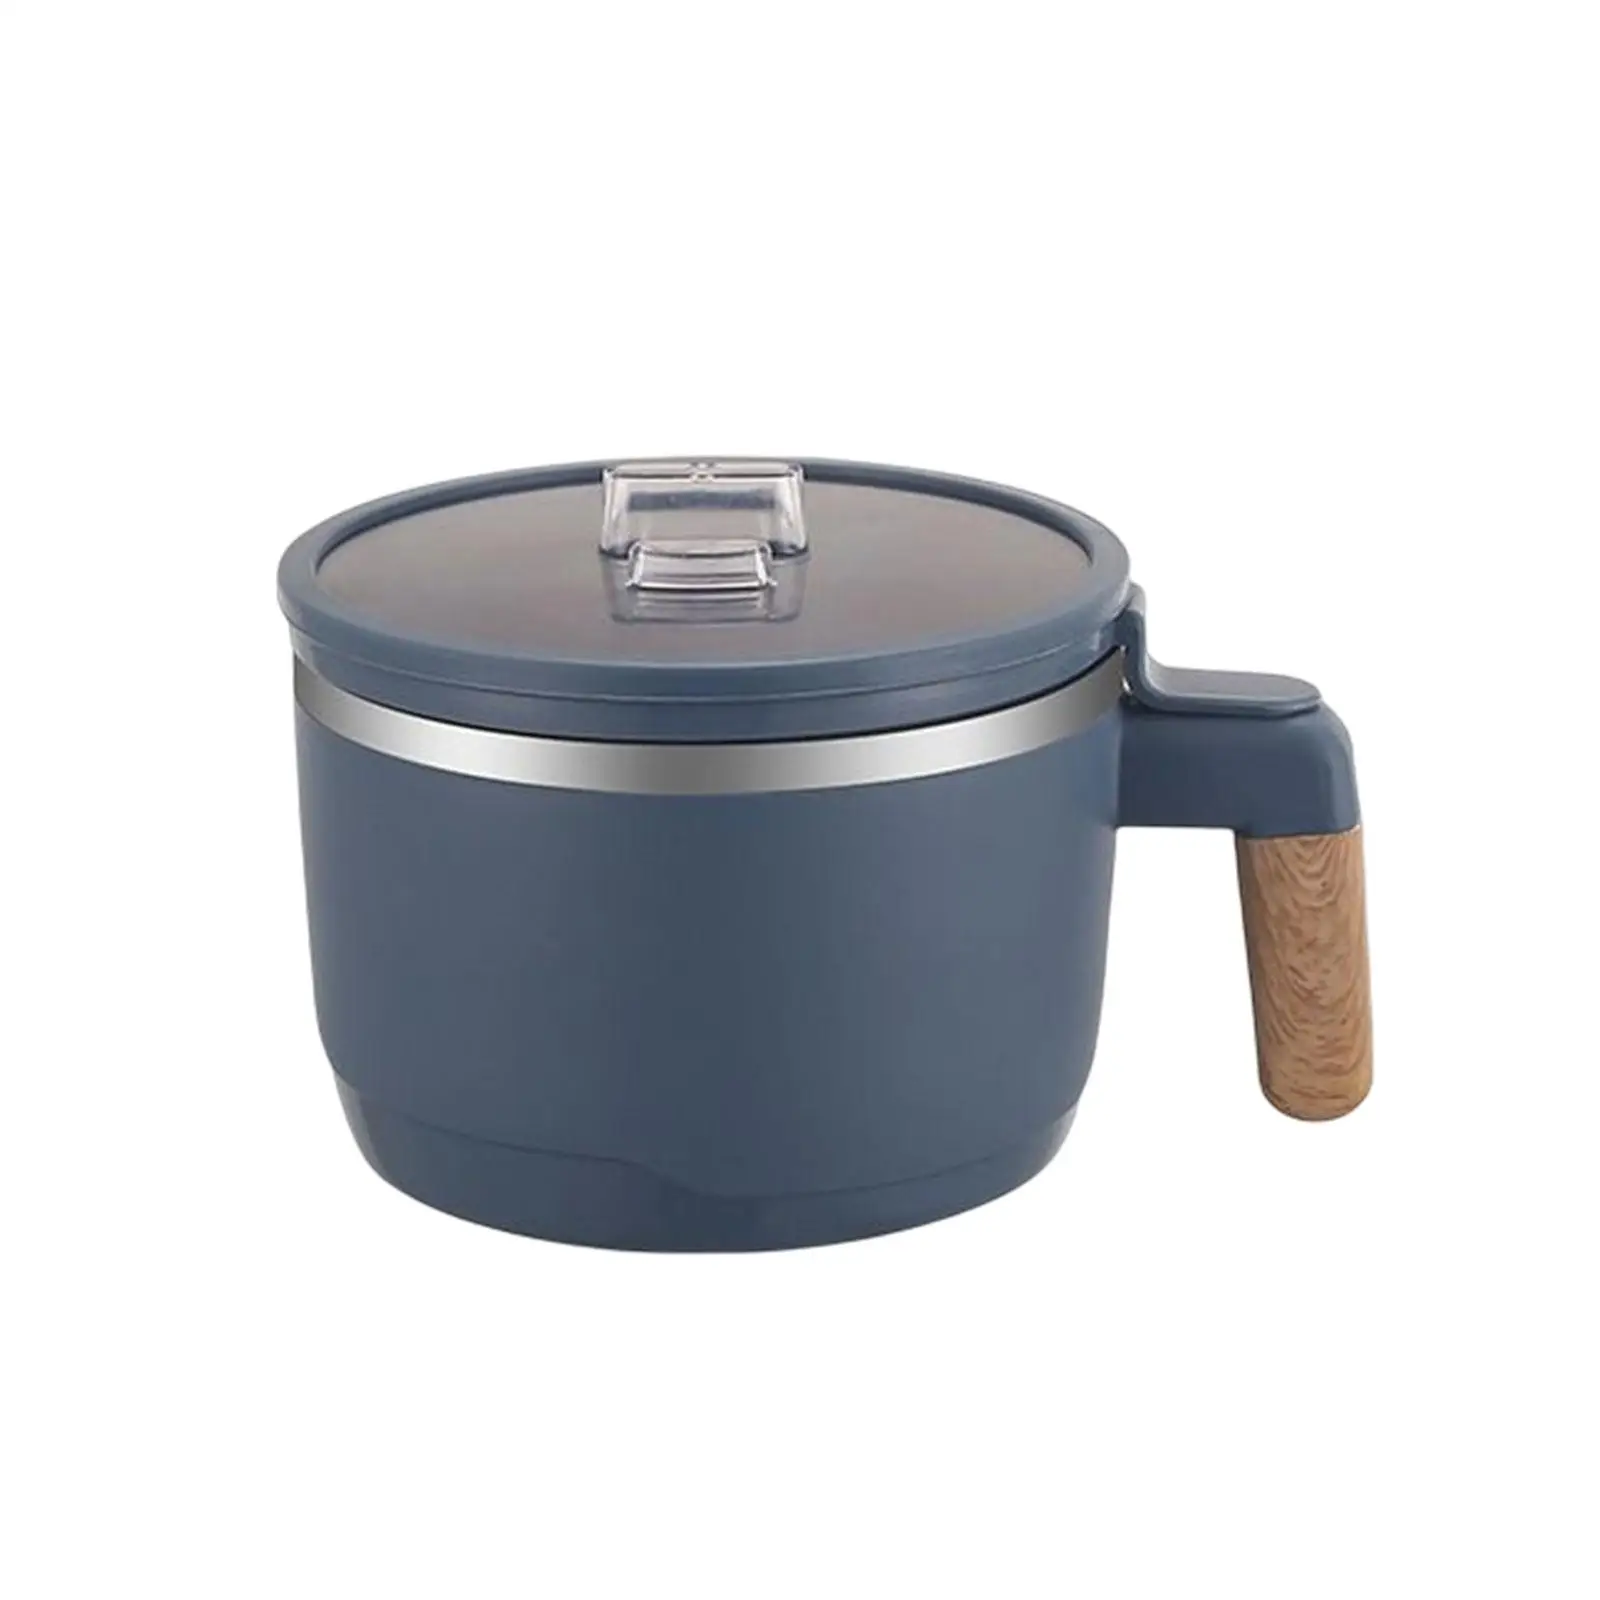 Stainless Steel Ramen Bowl Kitchen Tableware Stockpot with Drain Basket for Kitchen